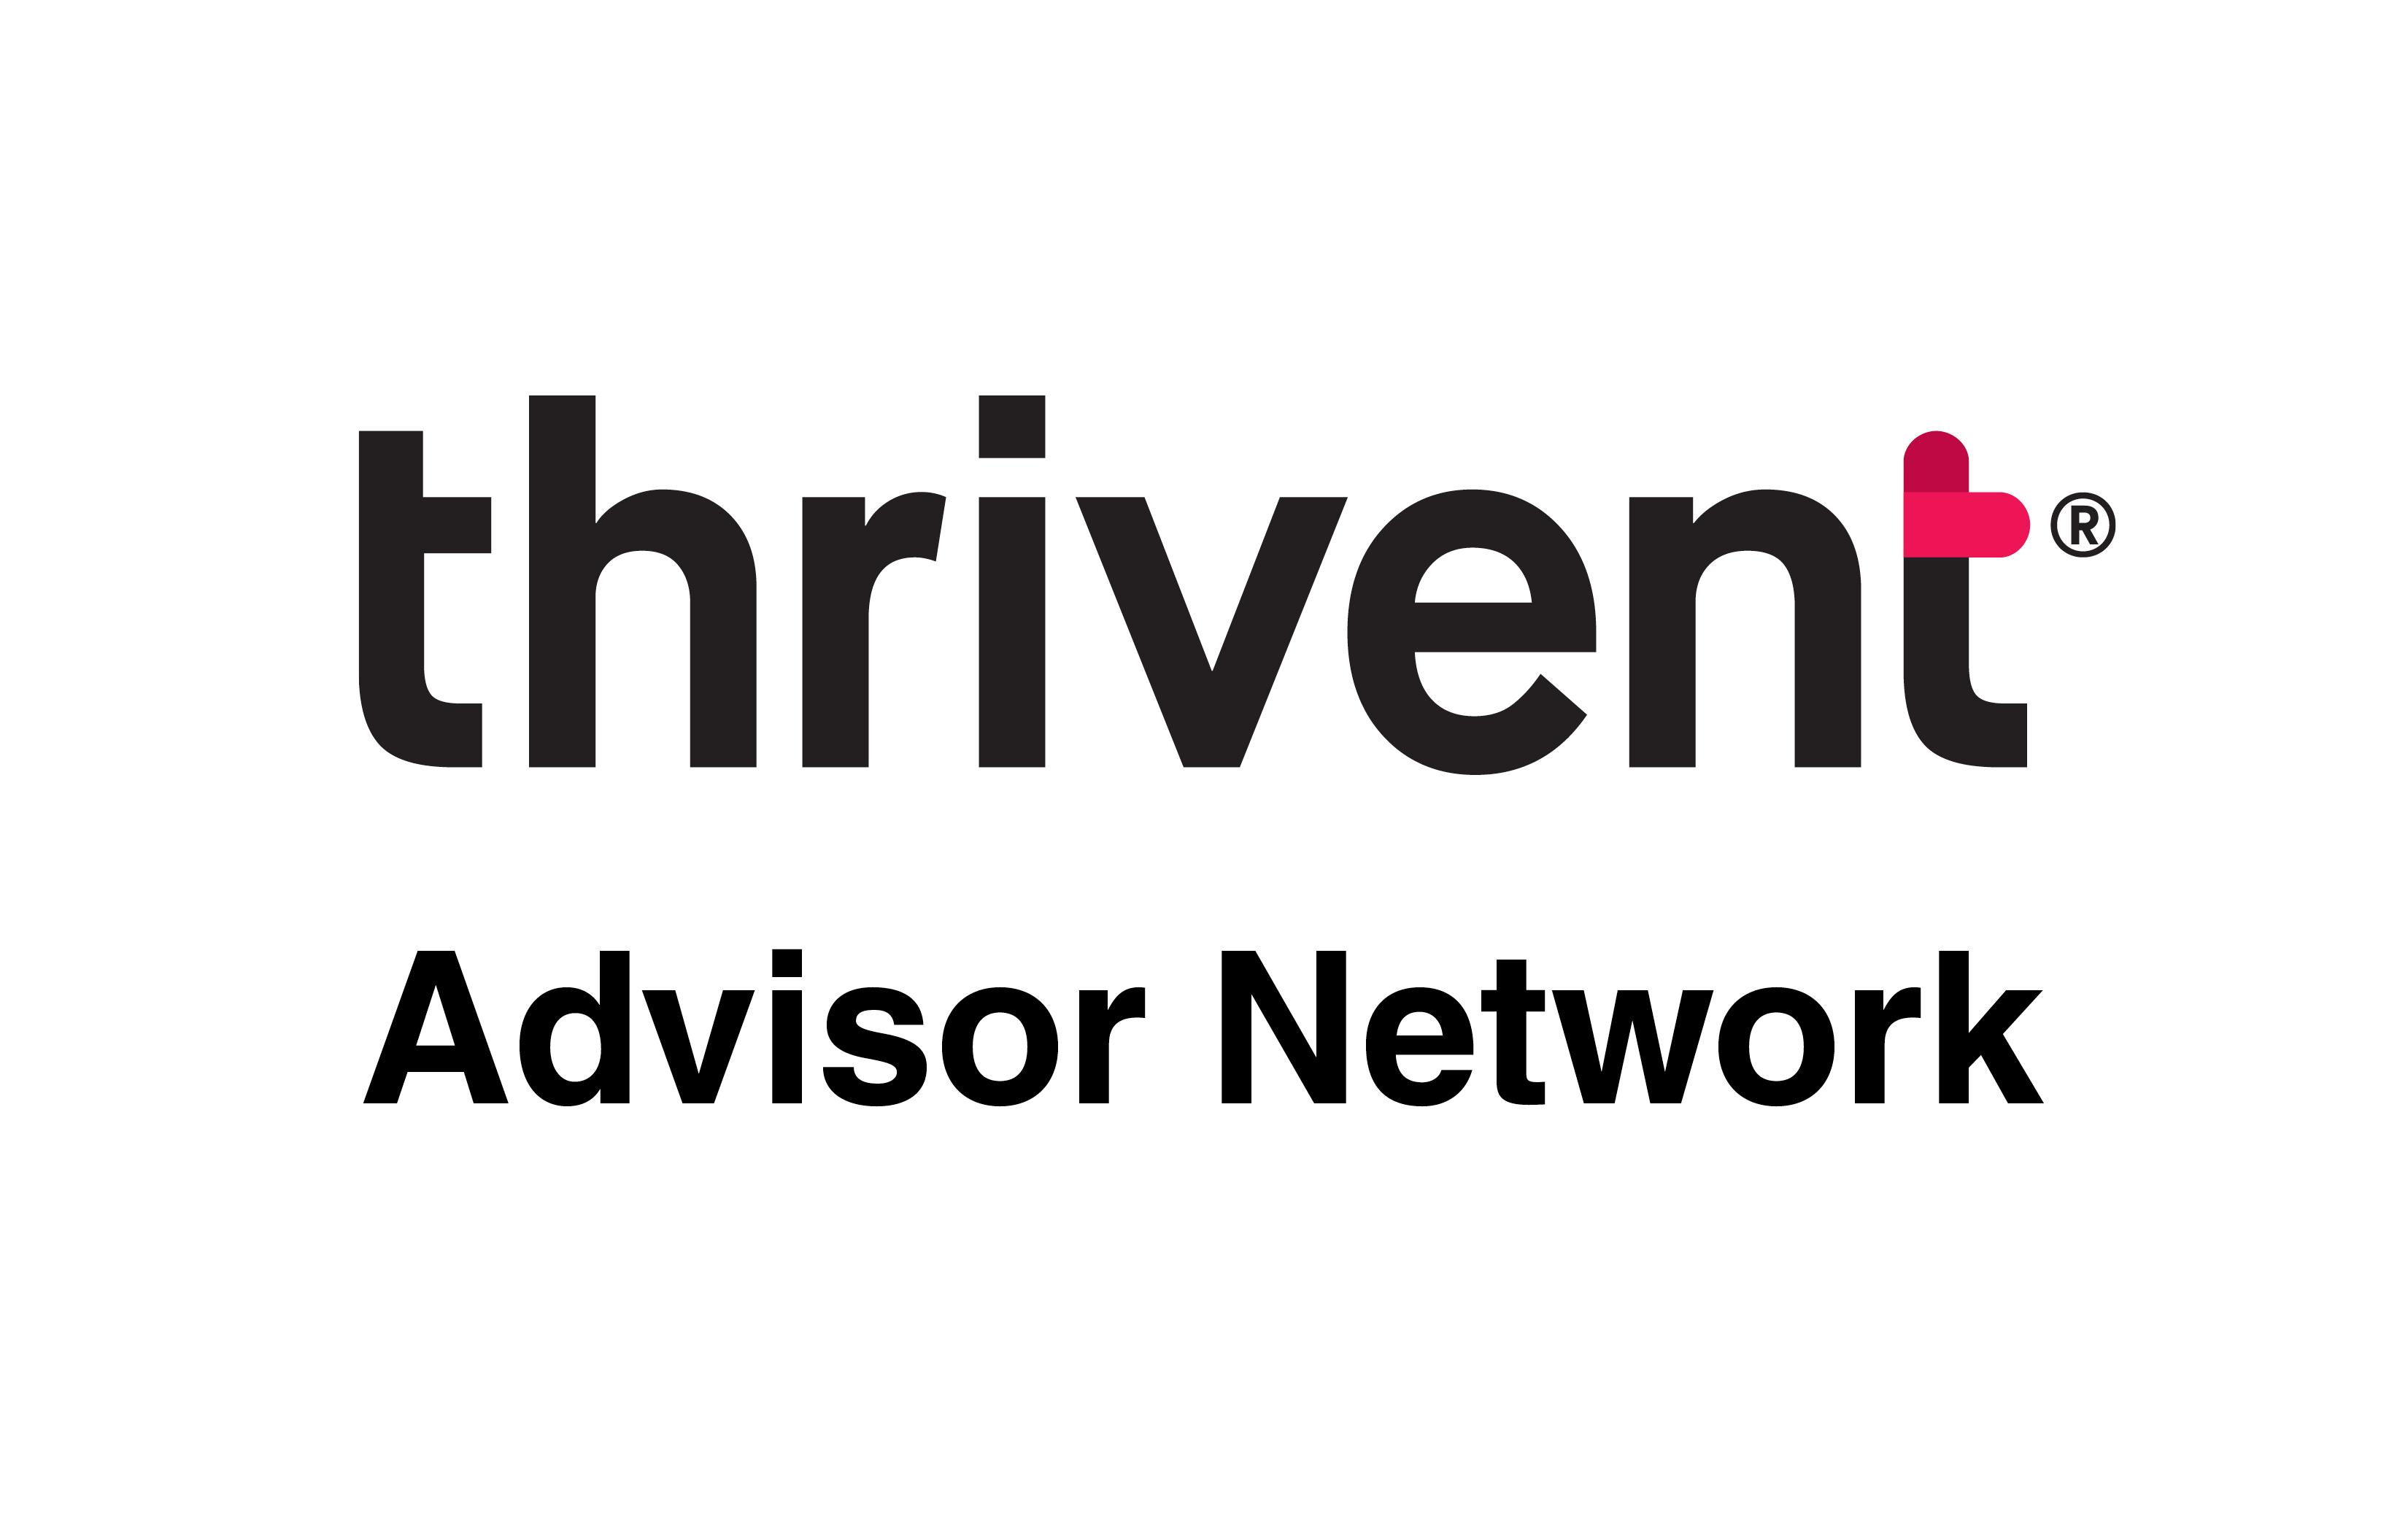 ThriventAdvisorNetwork_LogofarmVersion.jpg